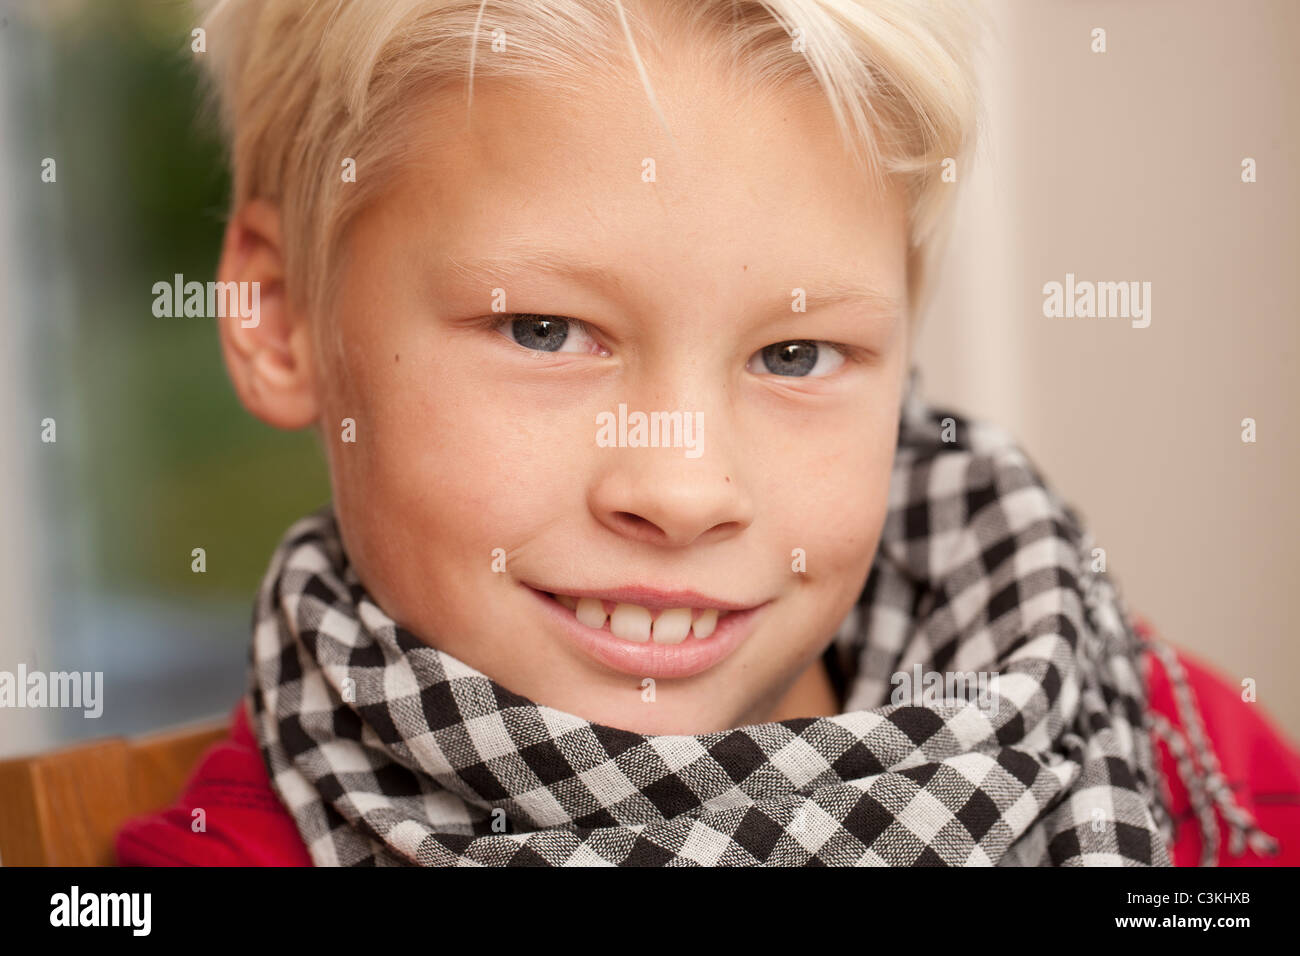 Portrait of boy Stock Photo